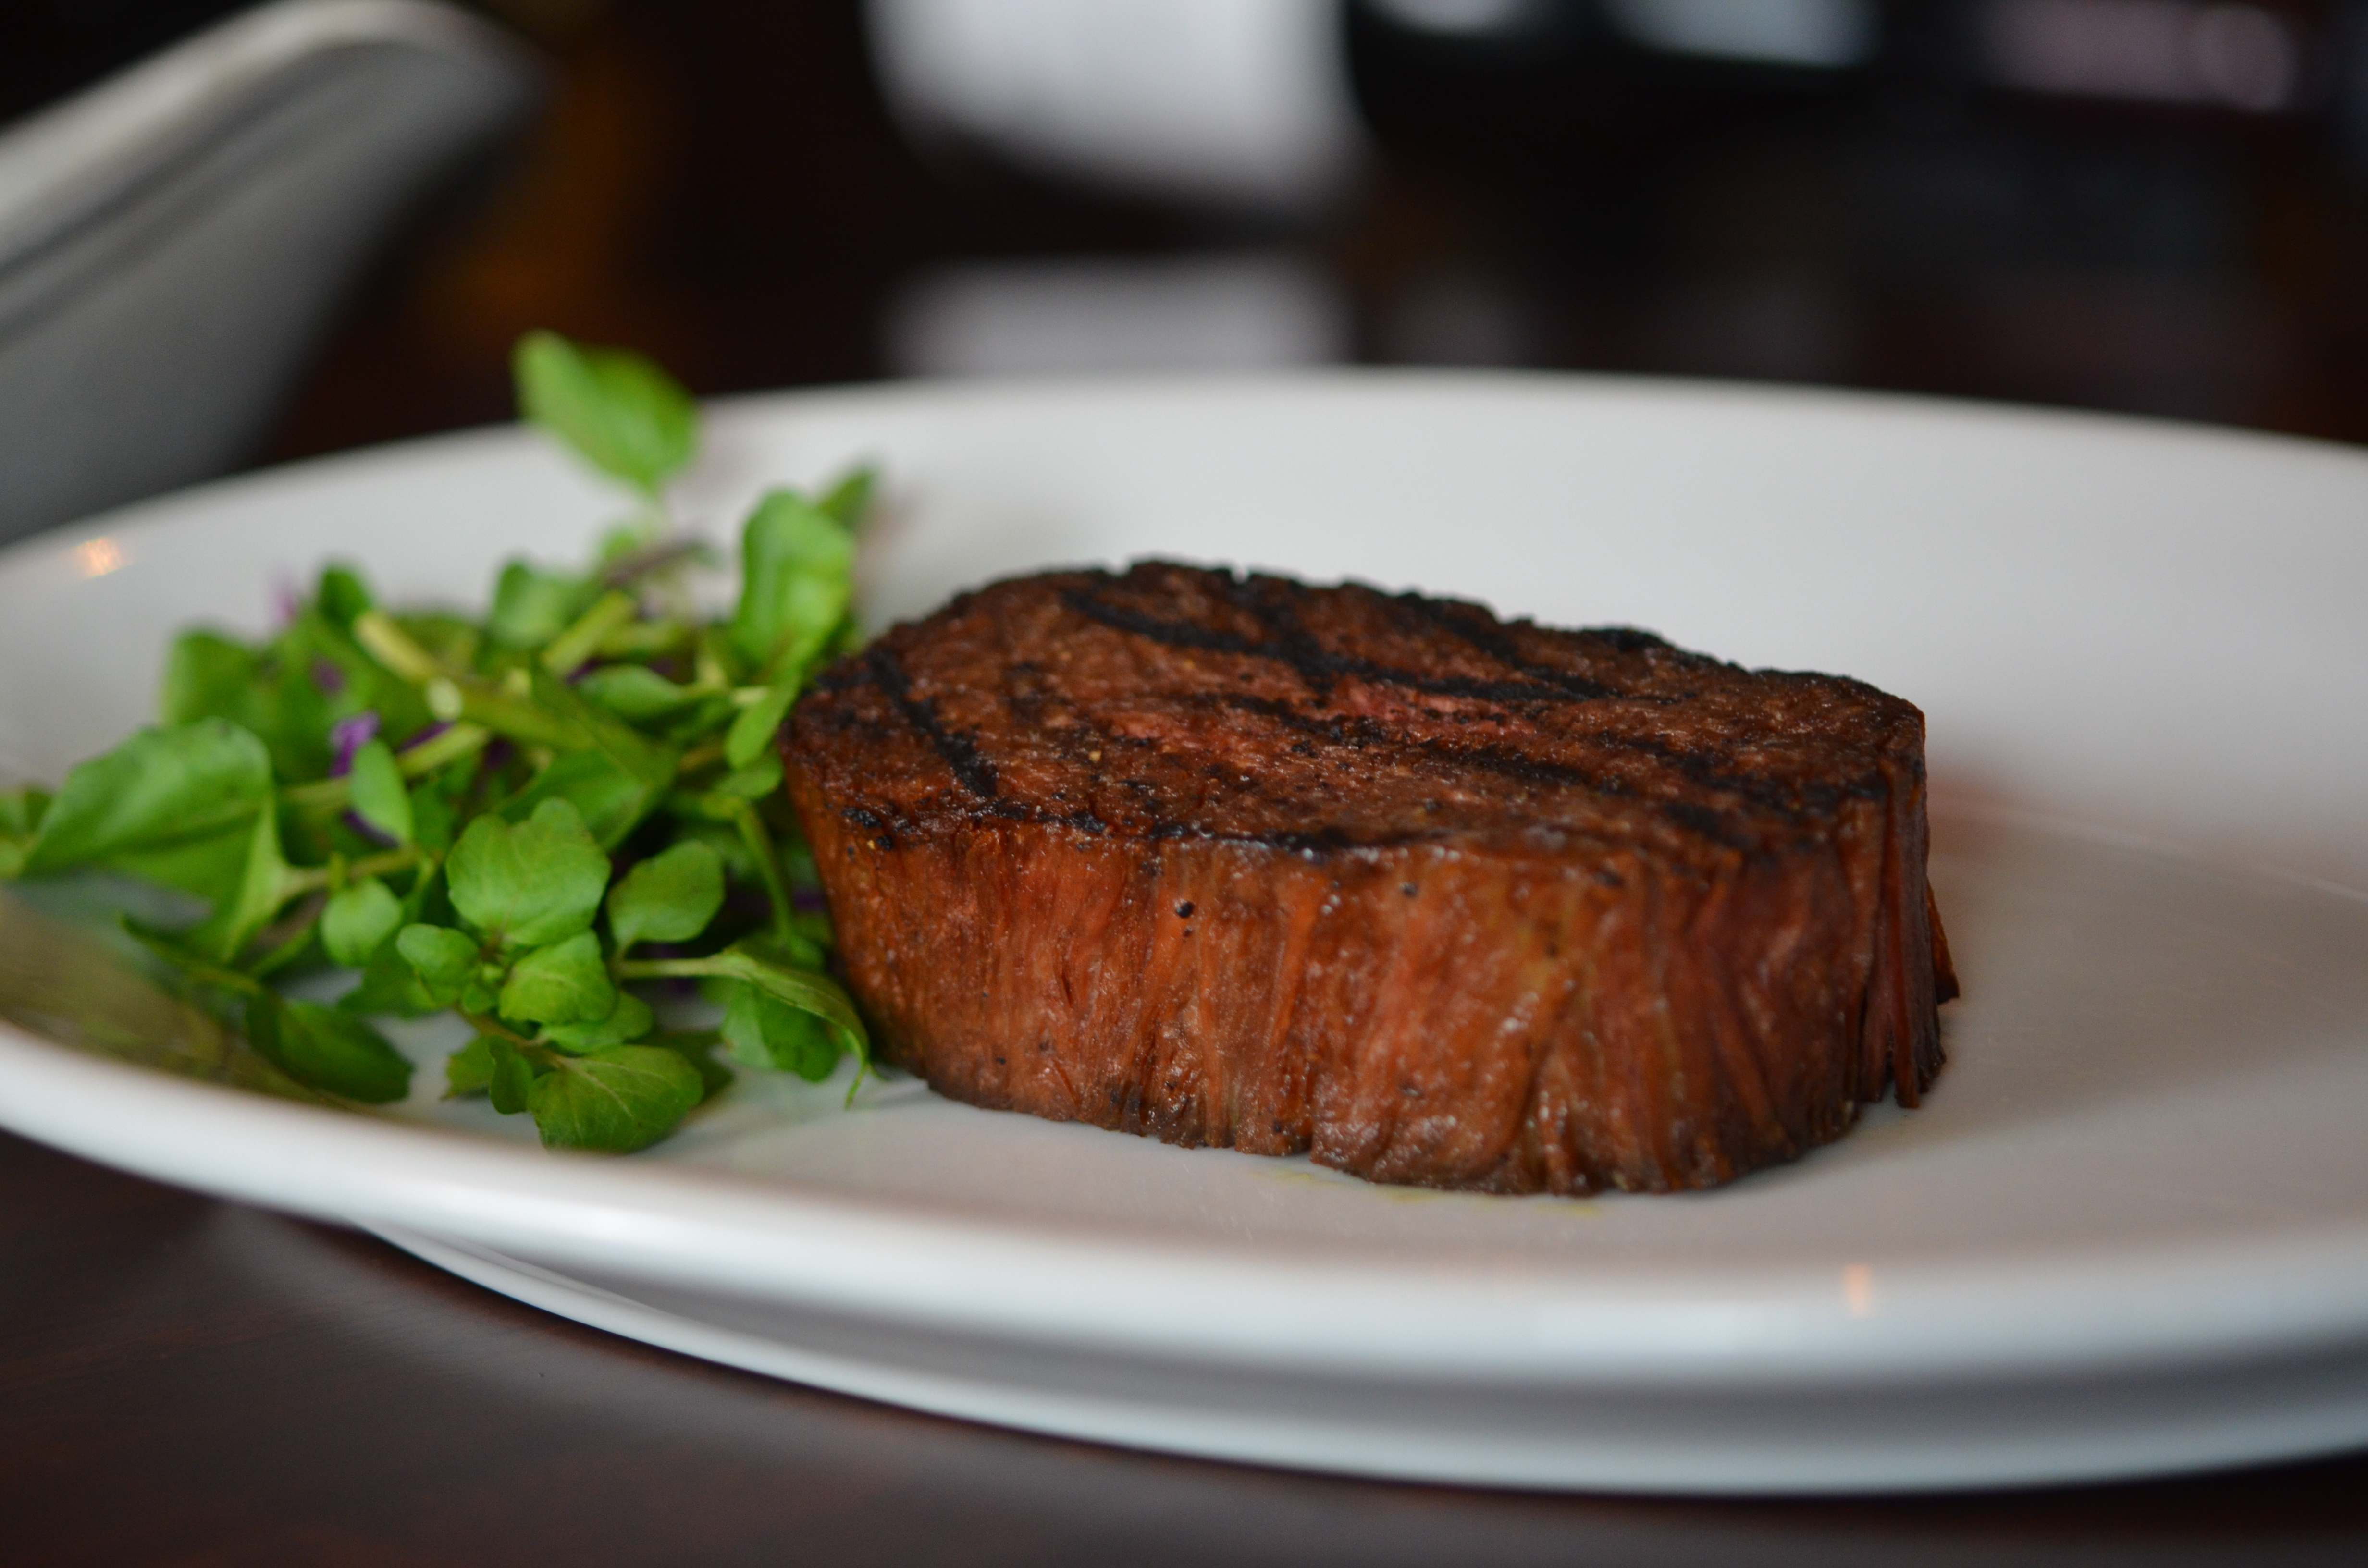 Chunk plant-based steak on a plate